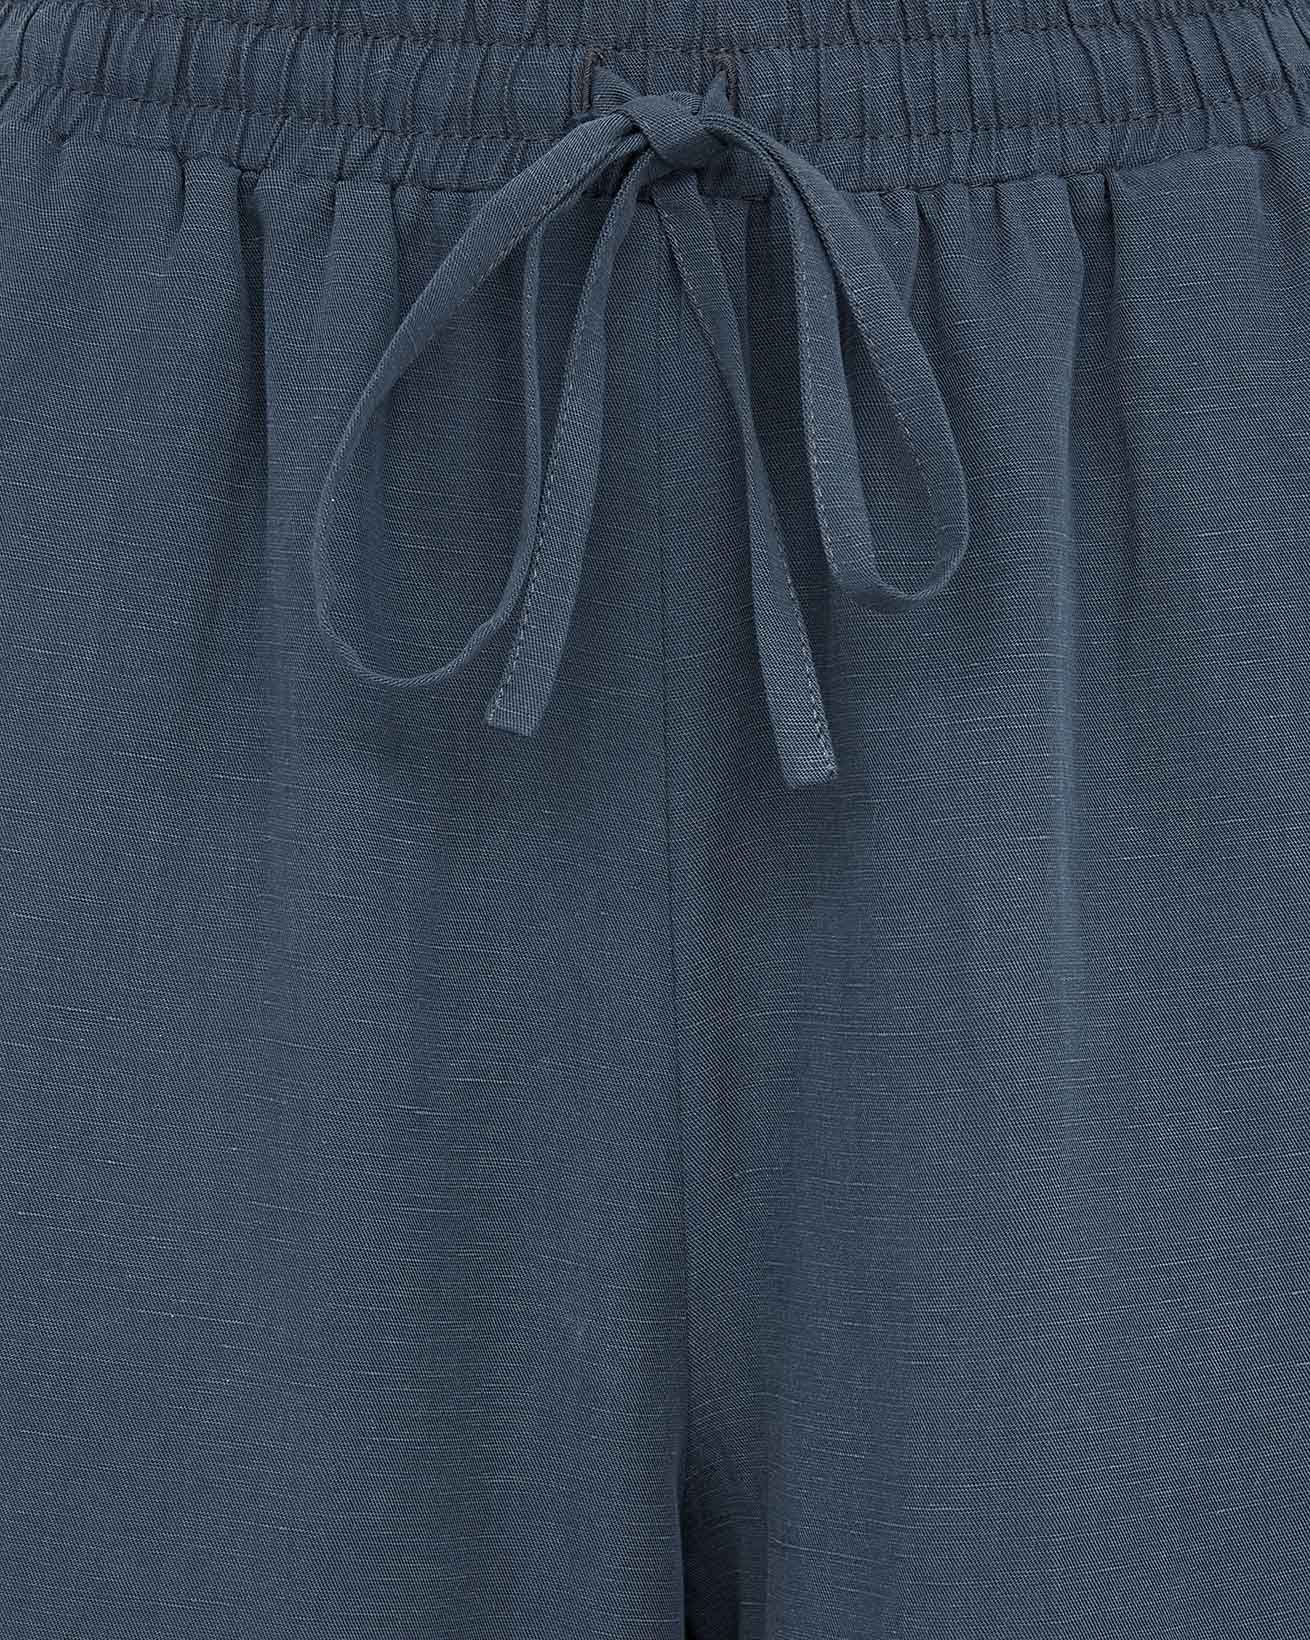 Lyocell/Linen Cropped Pants